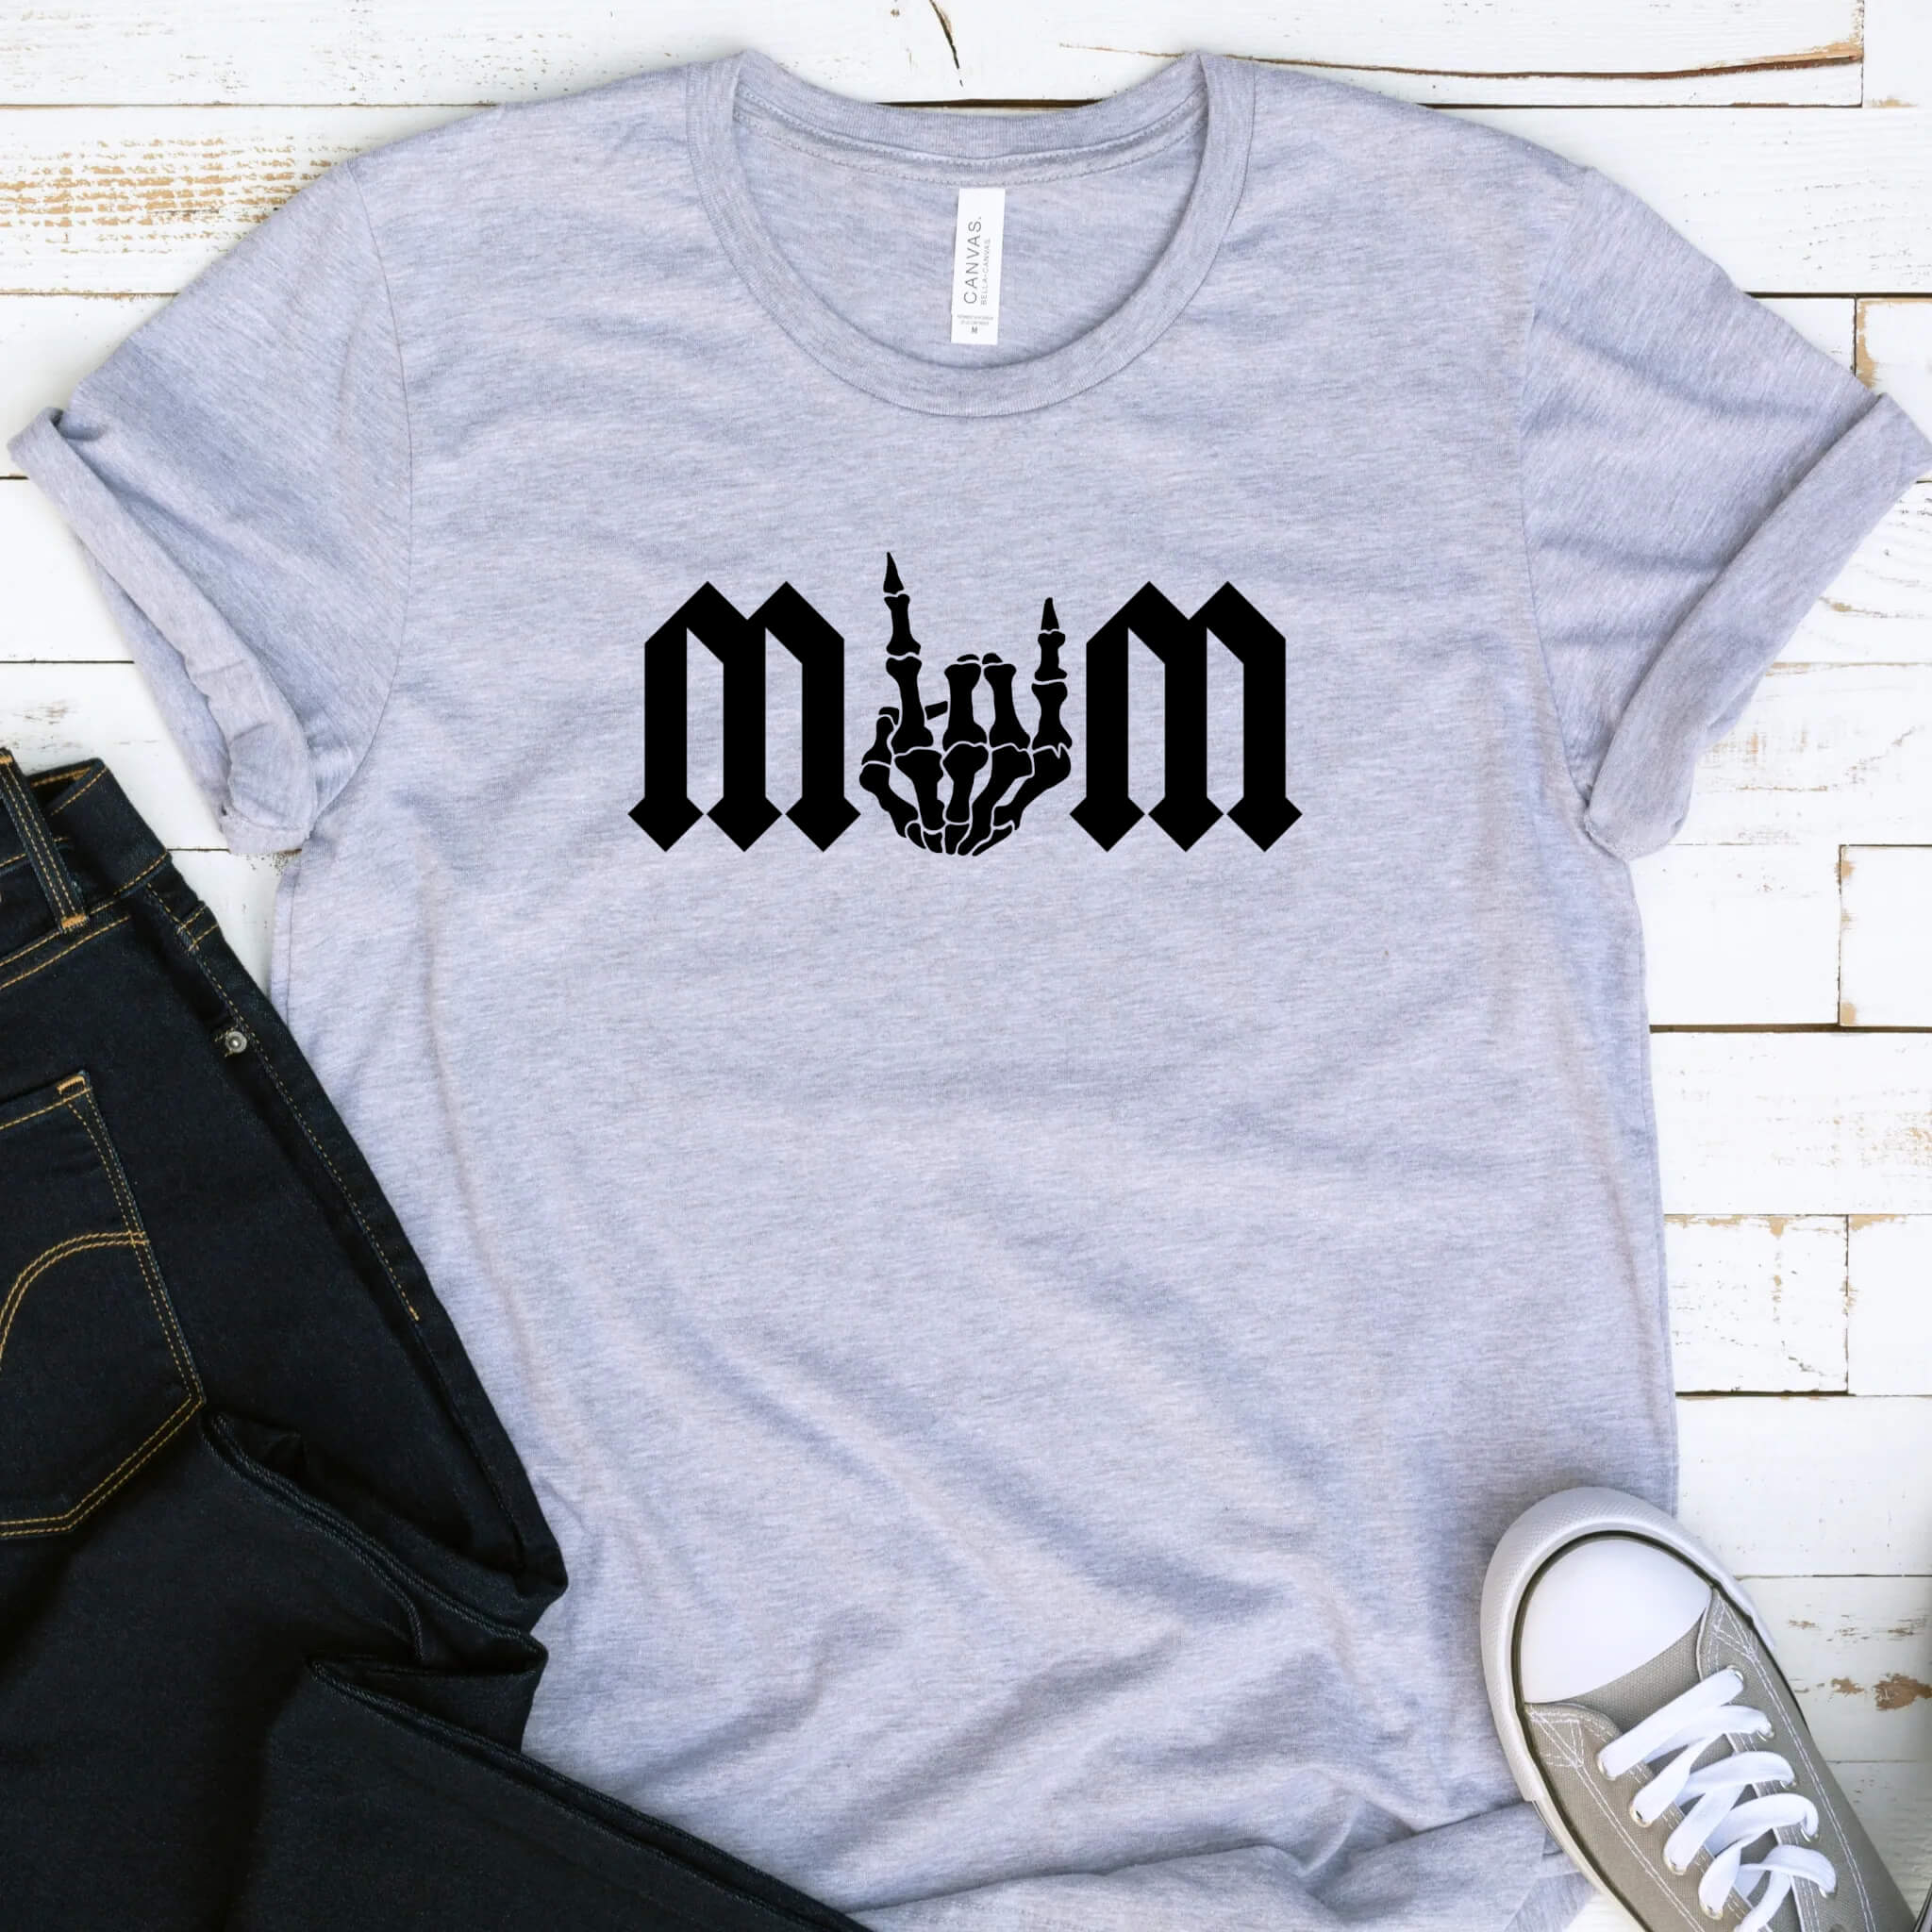 Rocker Mom Skelton Hand Women's Graphic Print T-Shirt